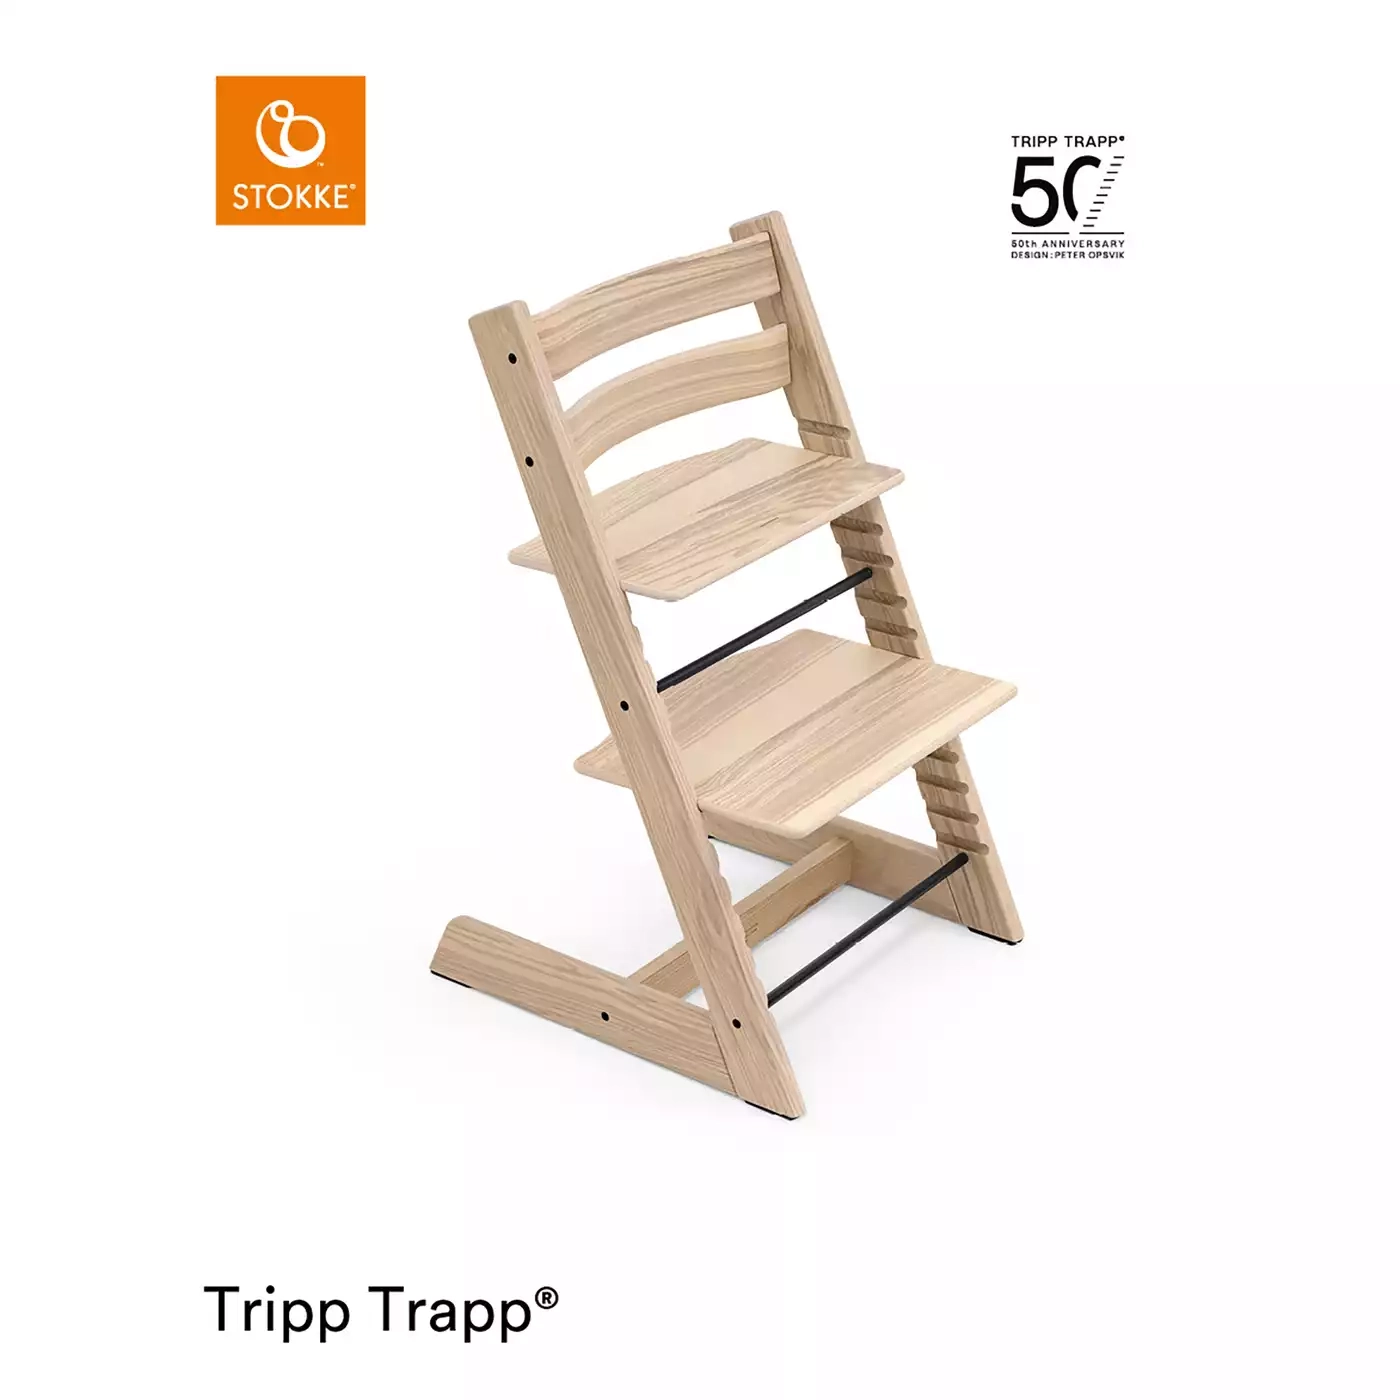 Tripp Trapp 50th Ash Natur Jubiläumsausgabe STOKKE 2000582917305 1